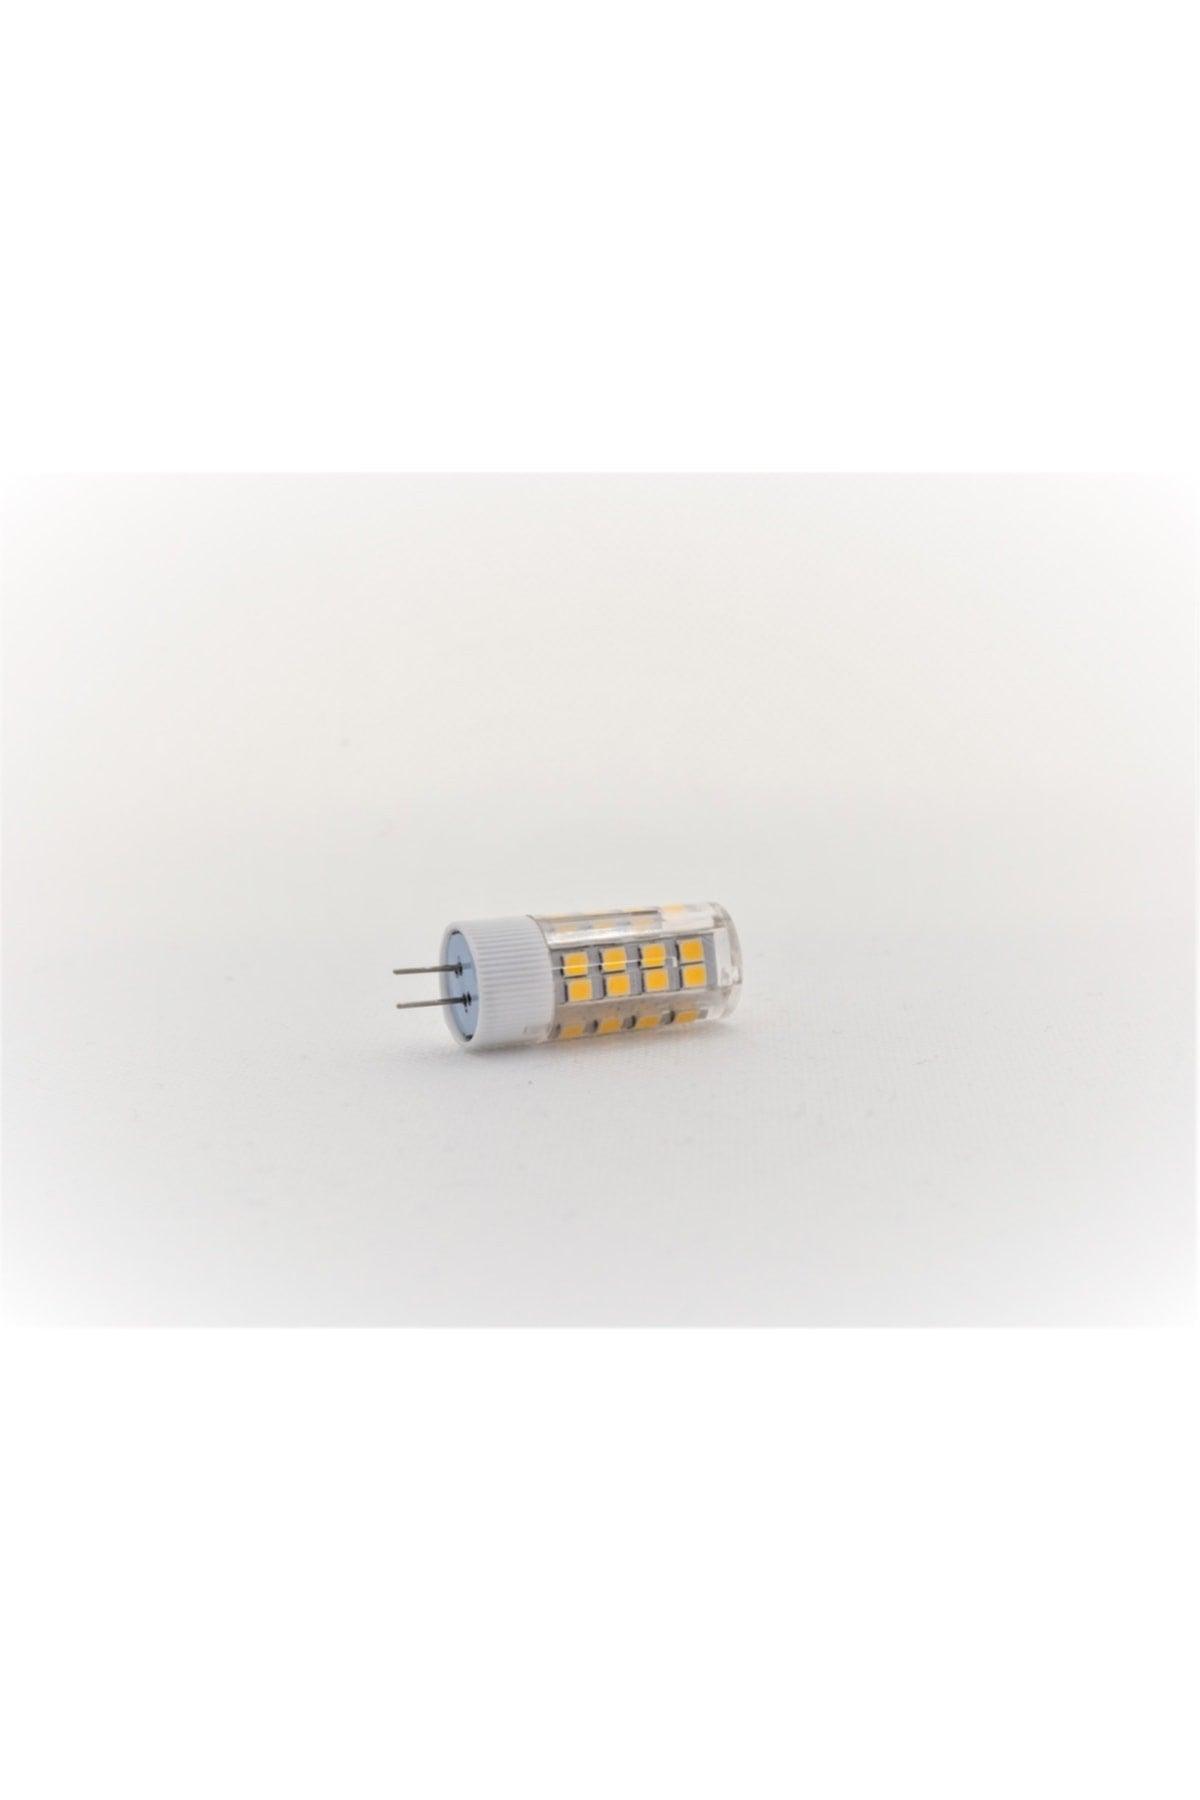 (10pcs)220v G4 5w Capsule Led Bulb White